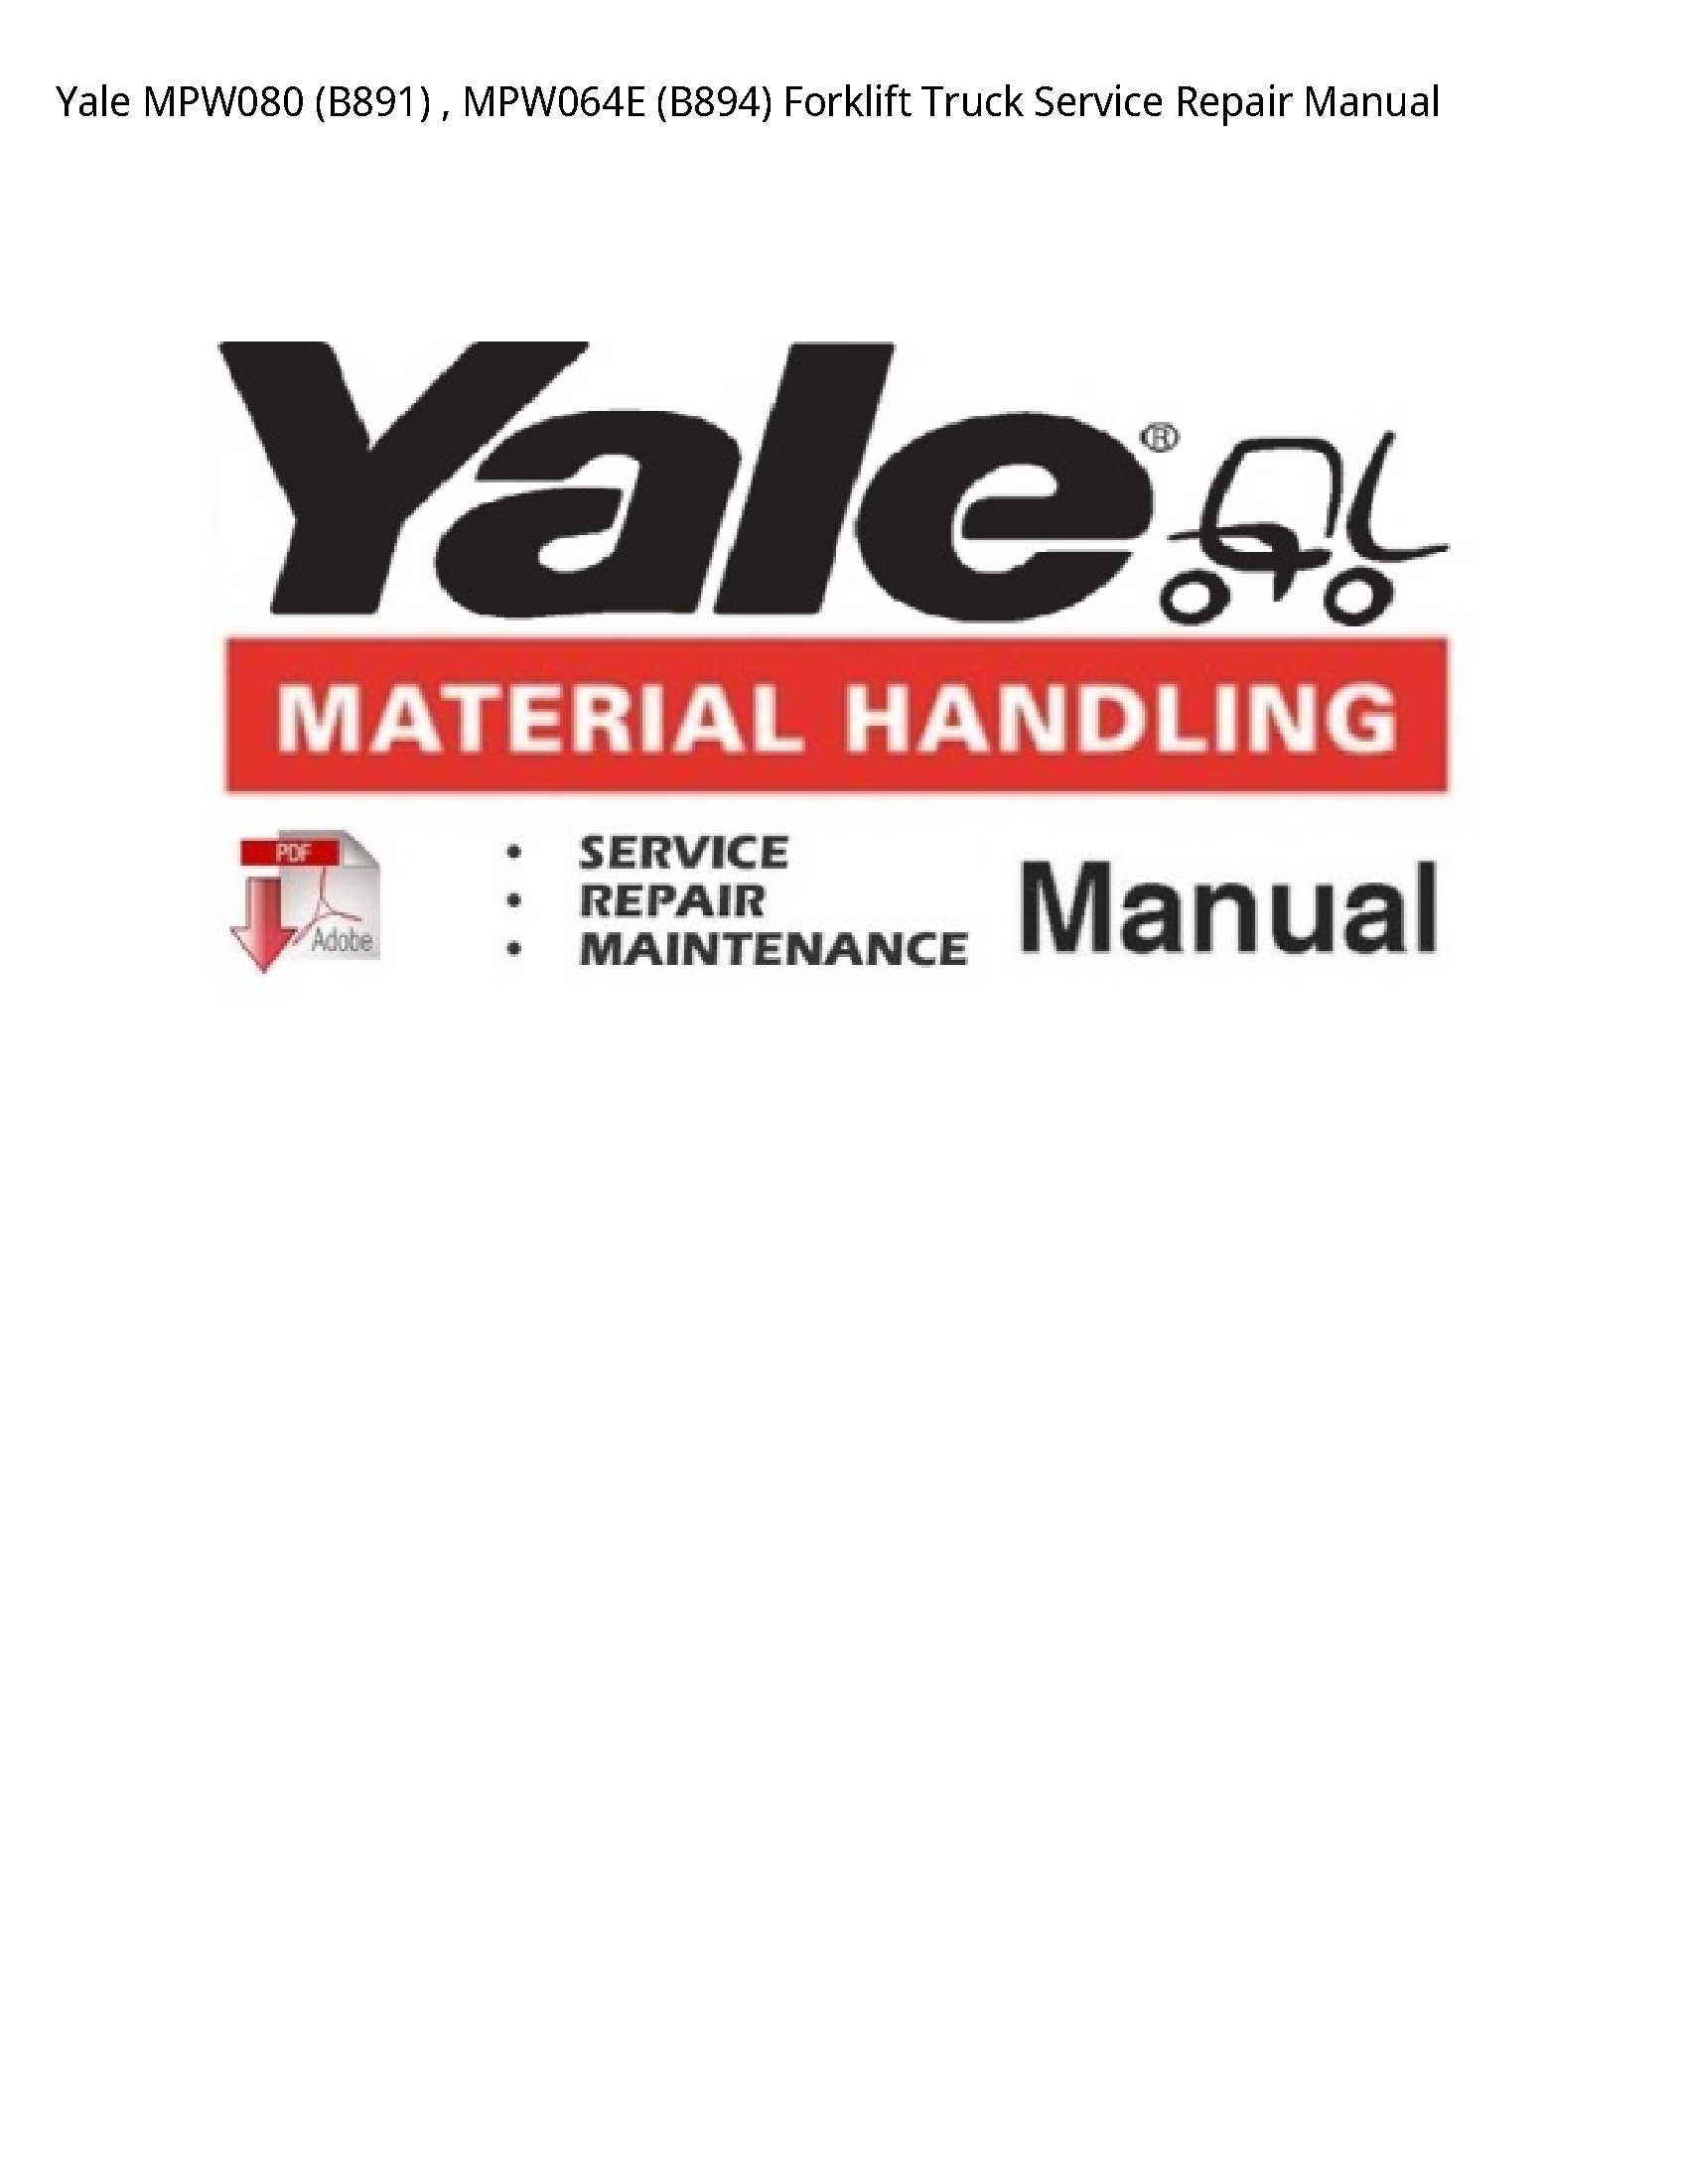 Yale MPW080 Forklift Truck manual